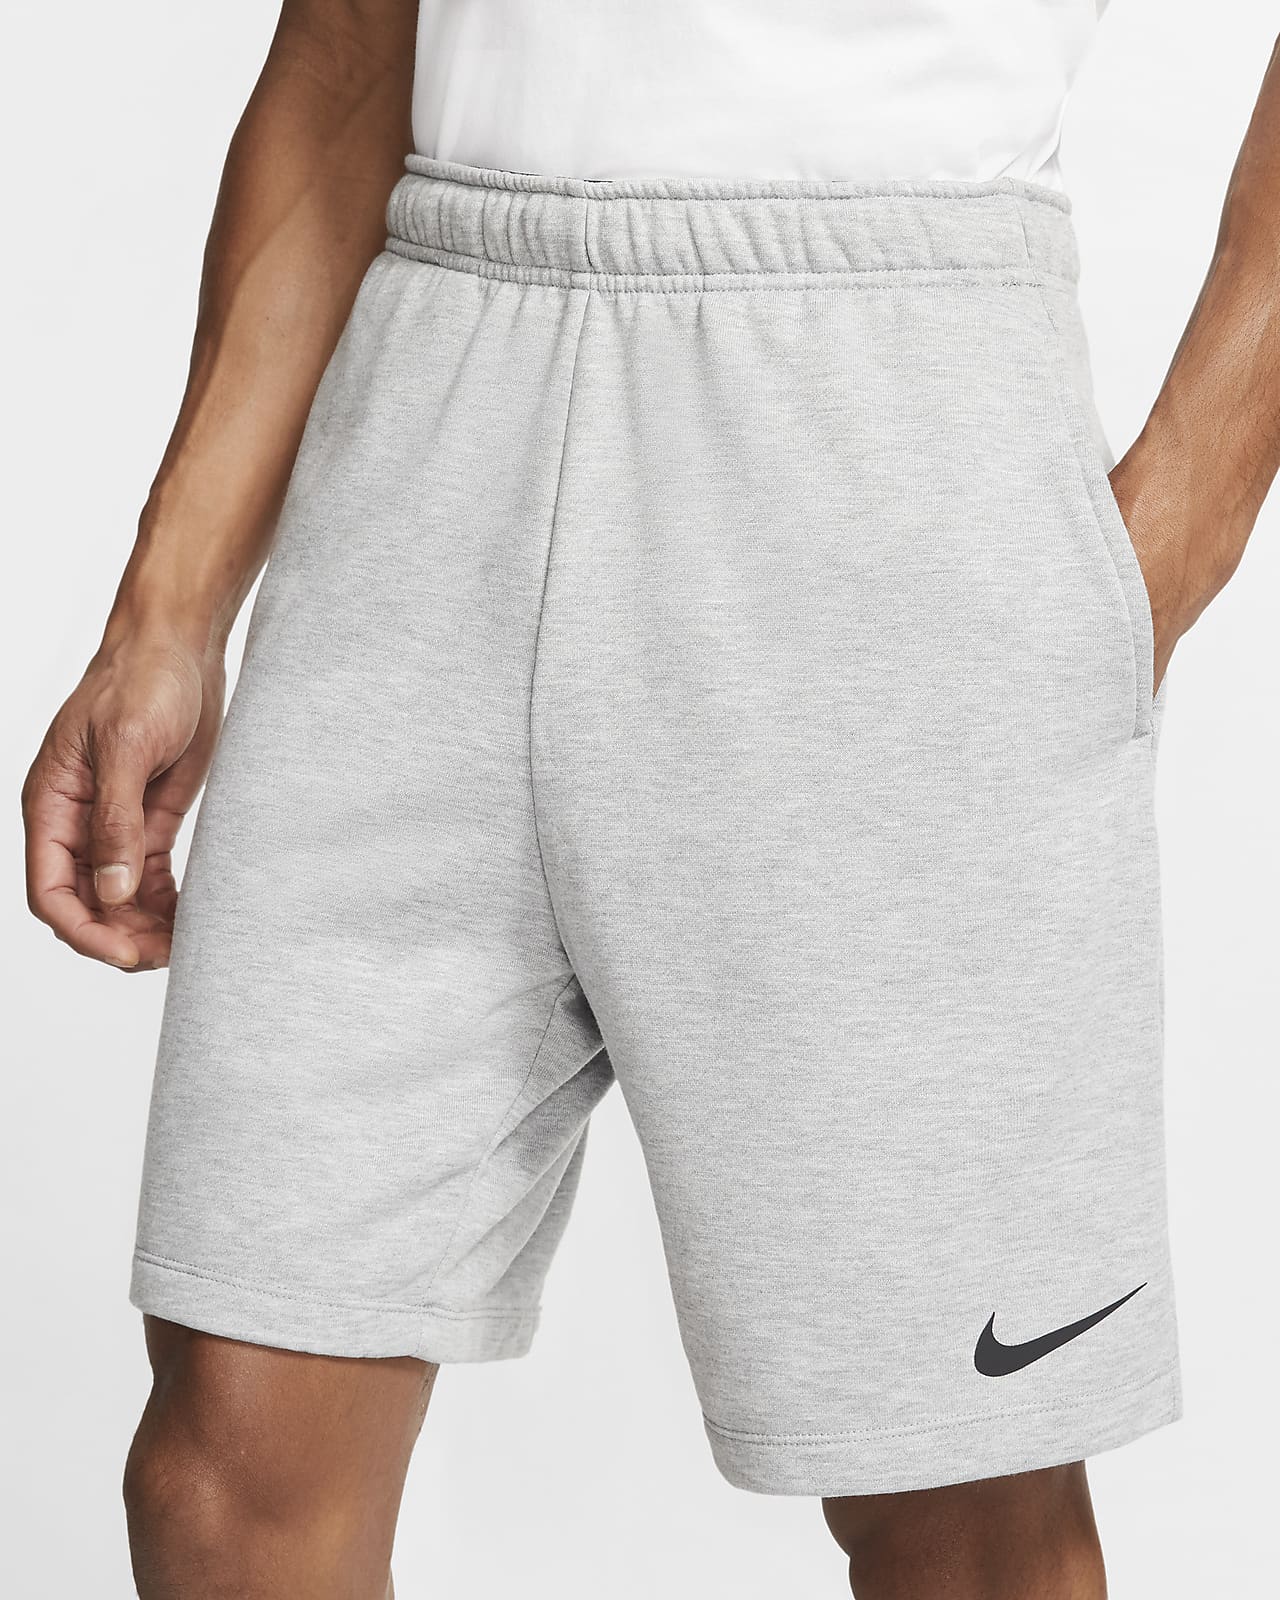 Шорты Nike Dri Fit мужские. Shorts Nike Fleece.